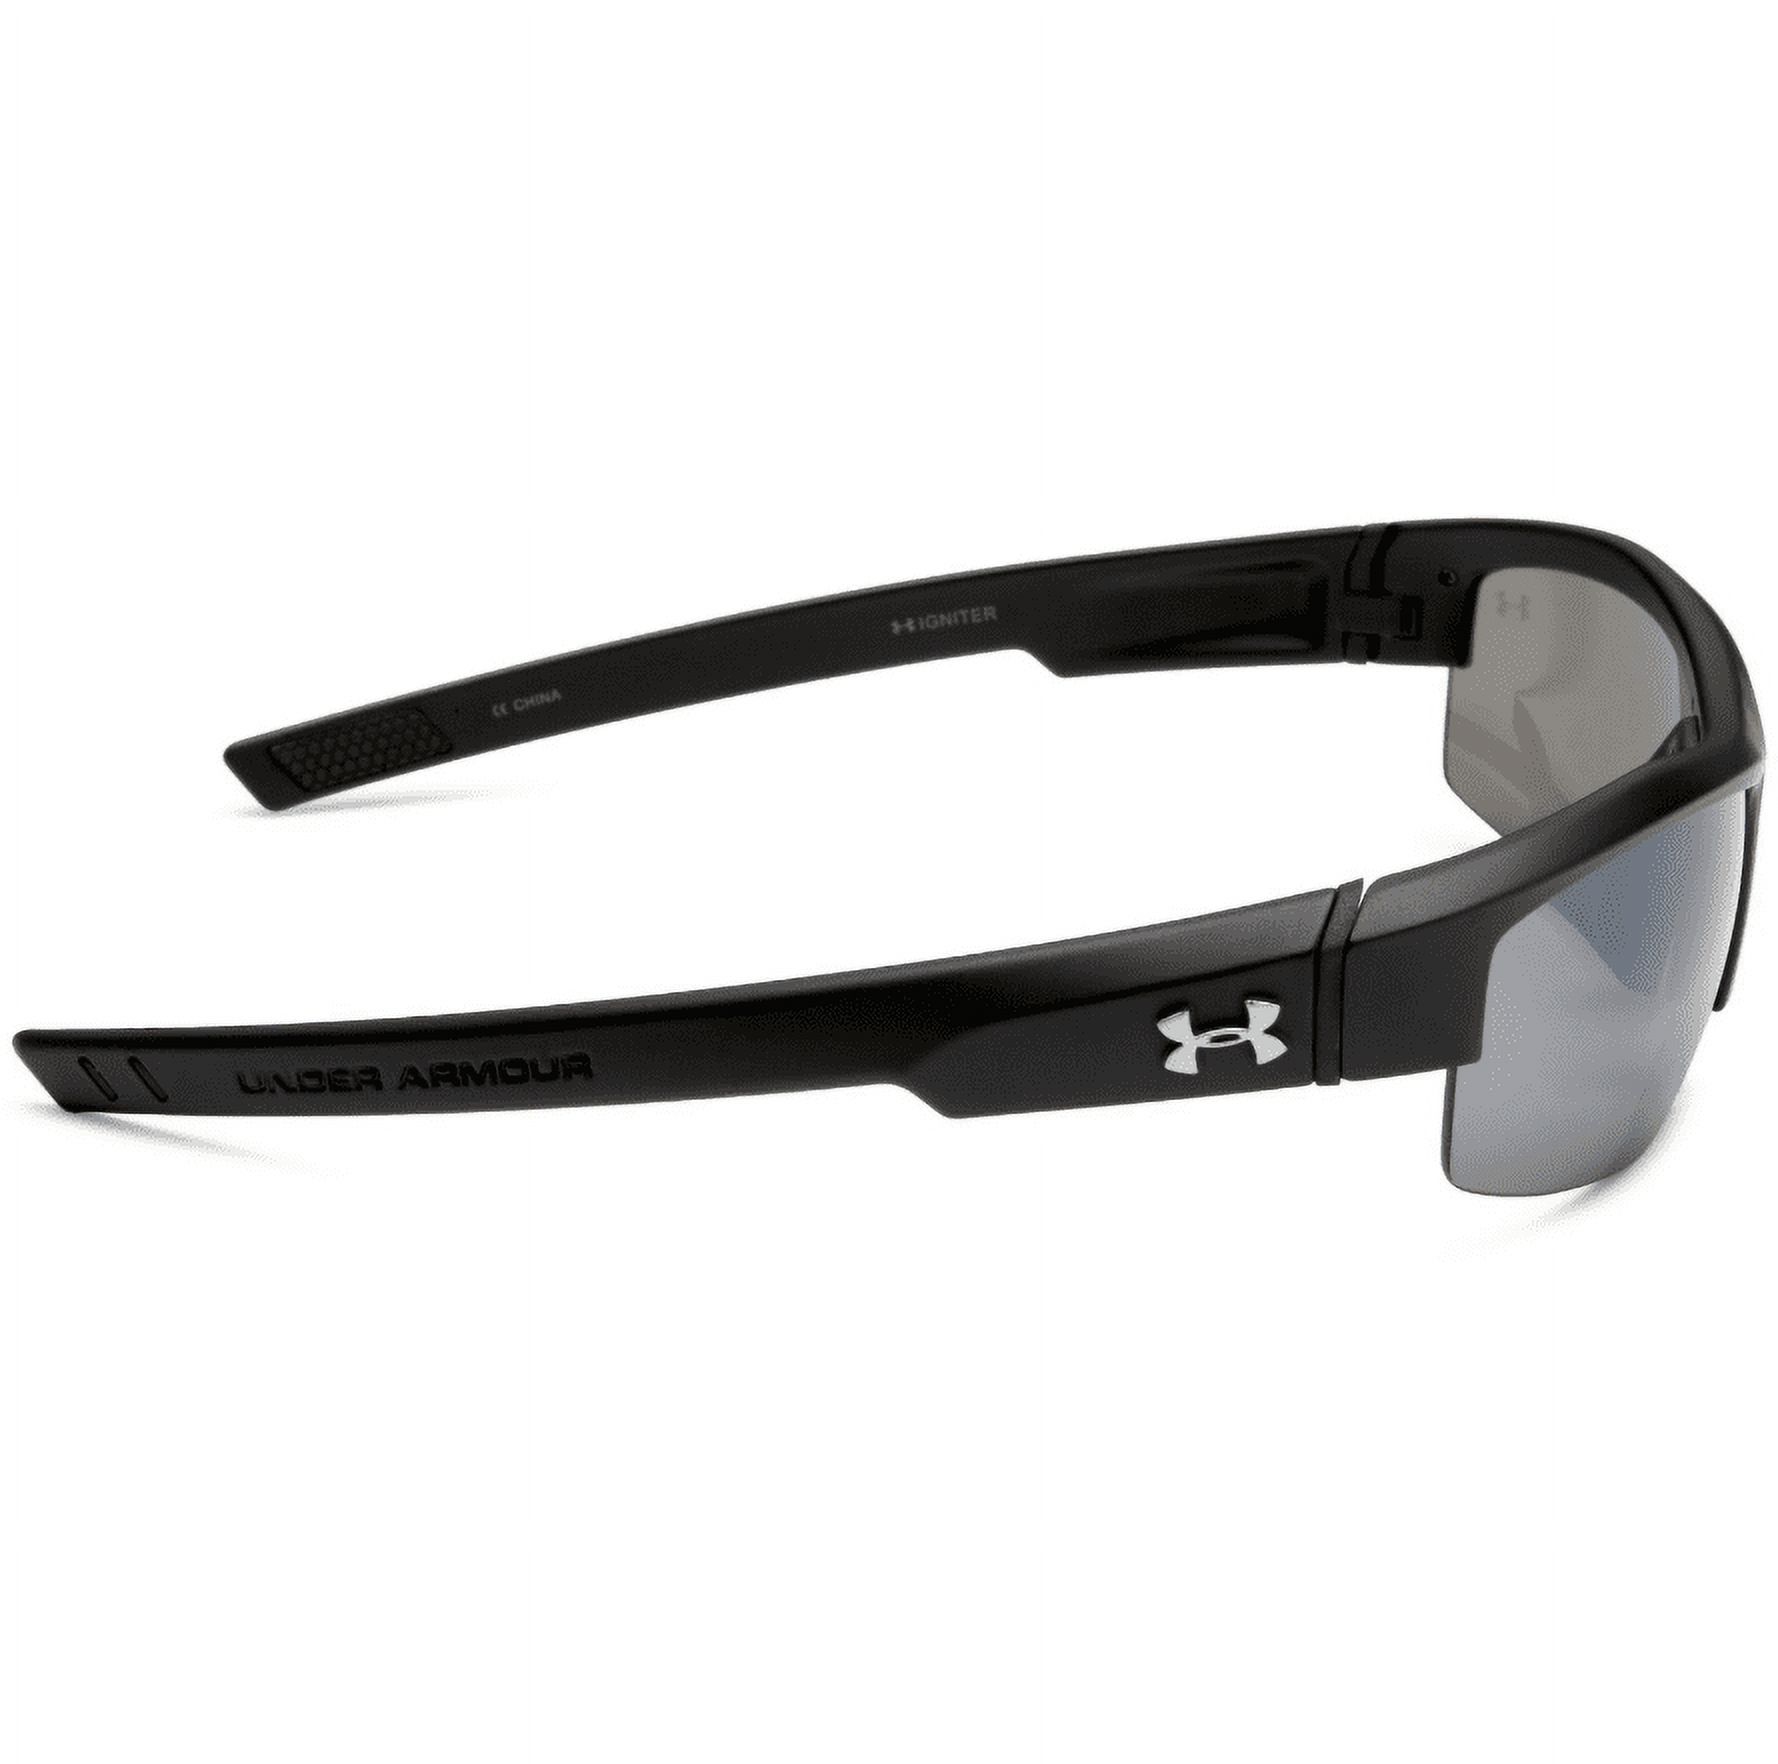 Under Armour UA Igniter Satin Black Frame Gray Mirror Lens Men's Sport Sunglasses - image 3 of 4